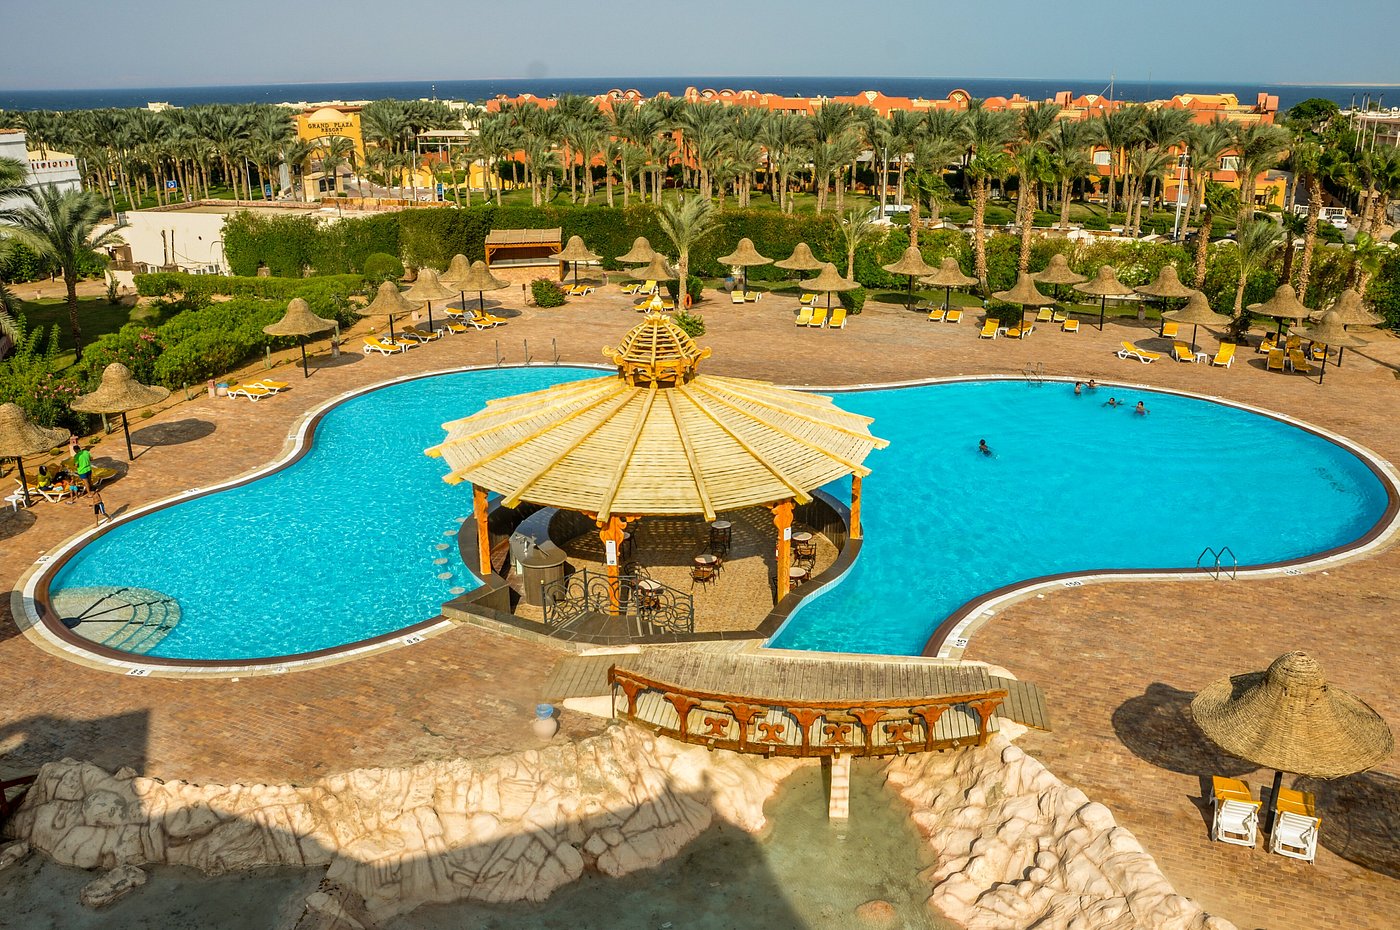 Parrotel lagoon resort 5 набк. Египет отель Parrotel Aqua. Parrotel Aqua Park Resort 4 Египет Шарм-Эль-Шейх. Паротель аквапарк Шарм-Эль-Шейх 5. Шарм-Эль-Шейх отель Парротель 4.